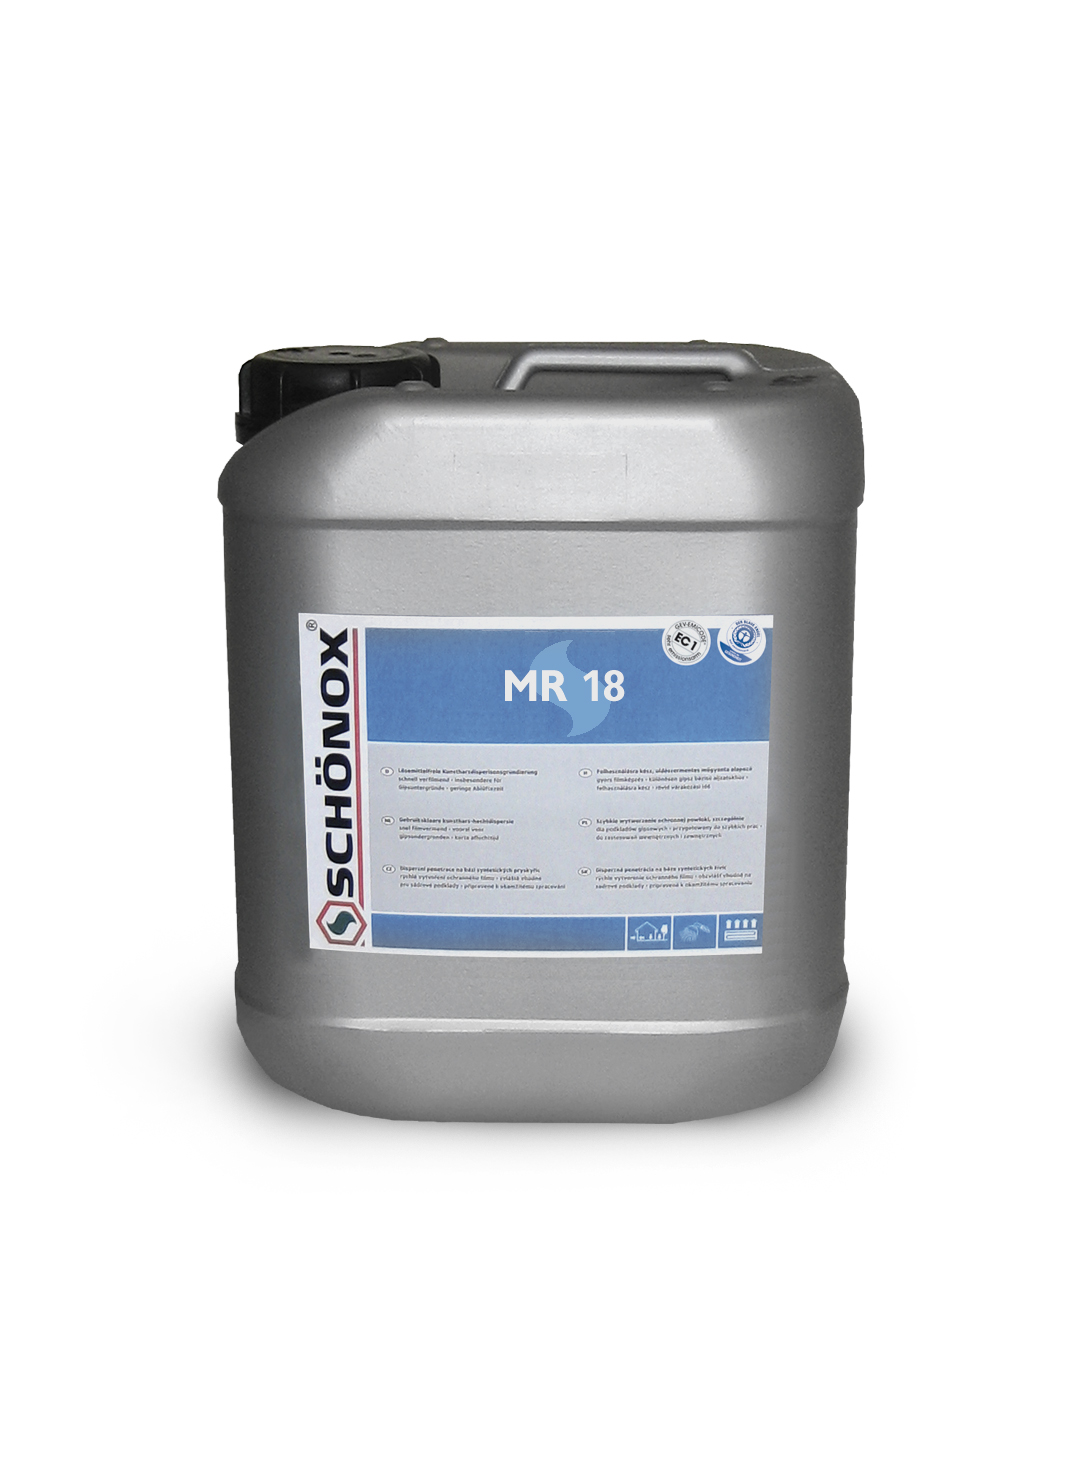 Image of MR 18 Product Bucket